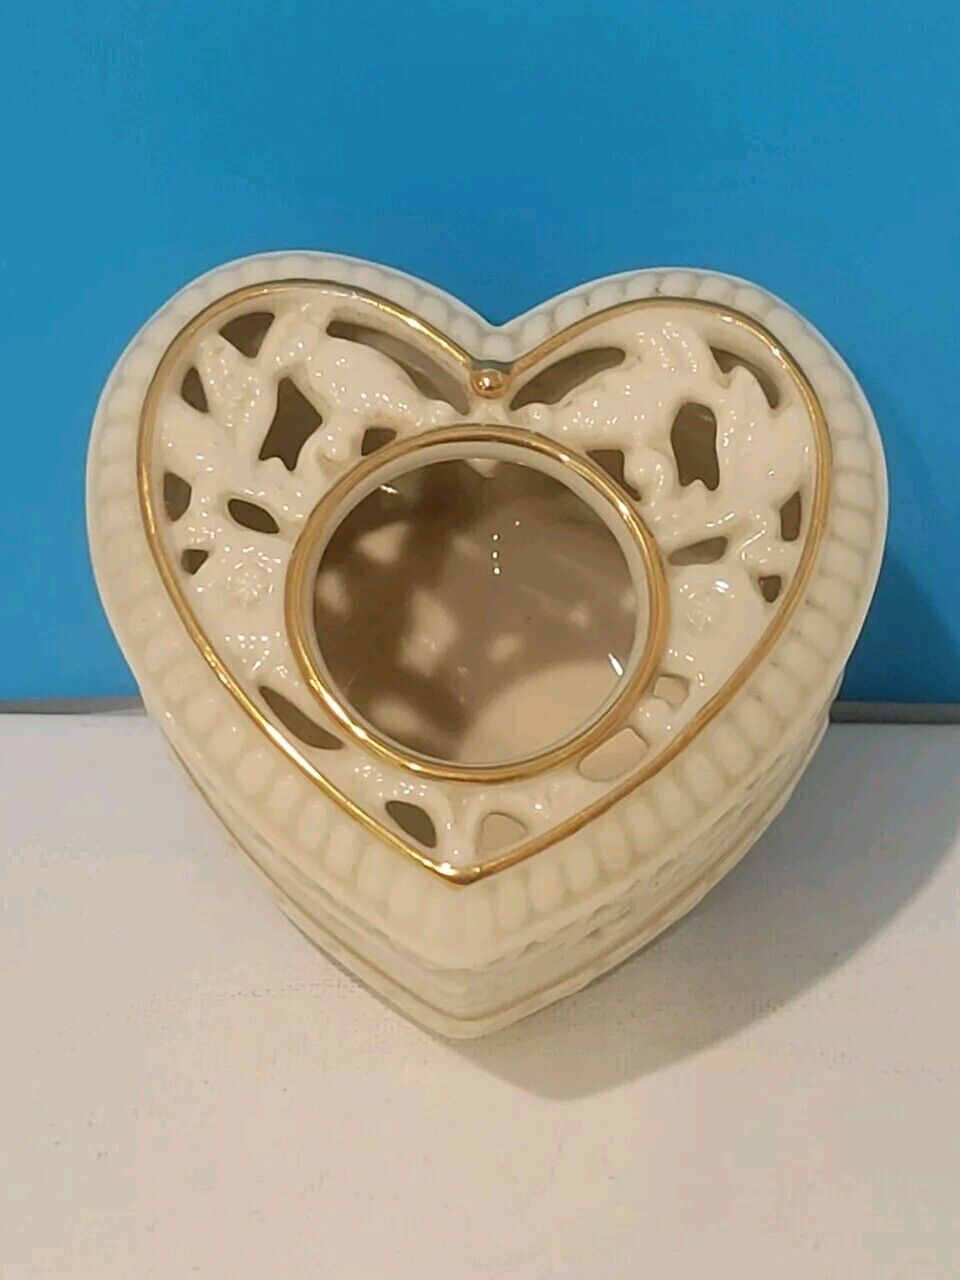 PartyLite Victoriana Tealight Holder Heart Shaped White Glazed Porcelain & Gold